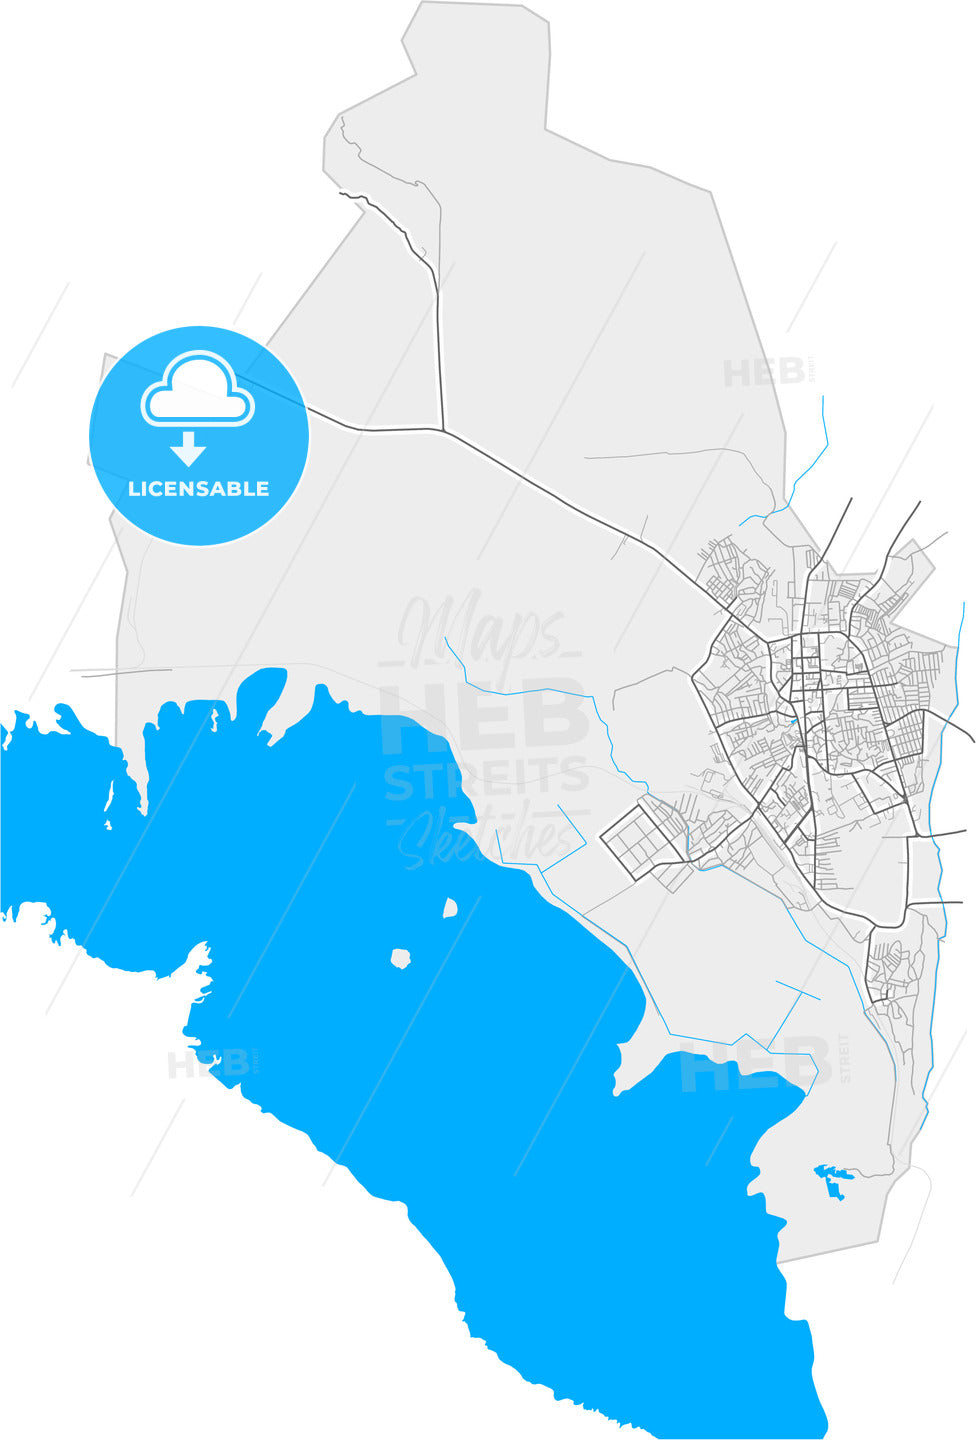 Nakhchivan, Azerbaijan, high quality vector map